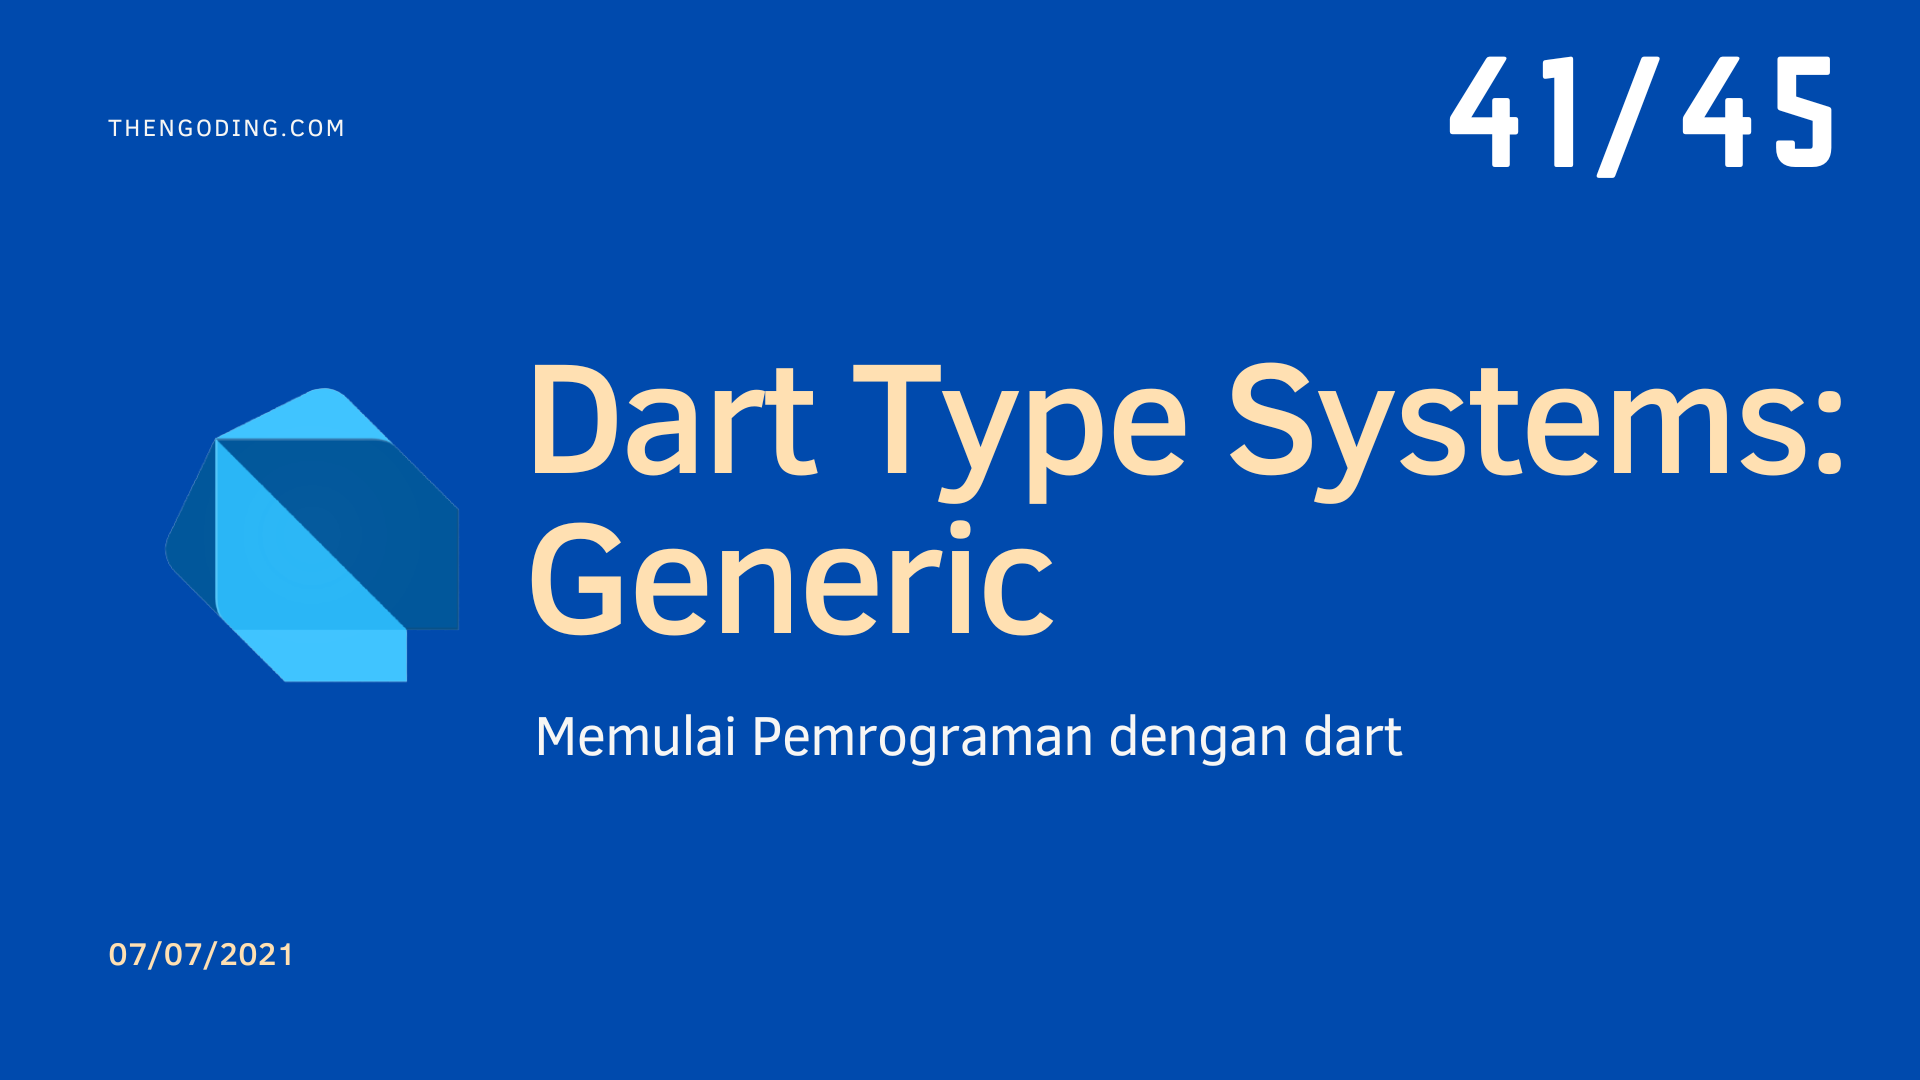 Dart type systems - Generic